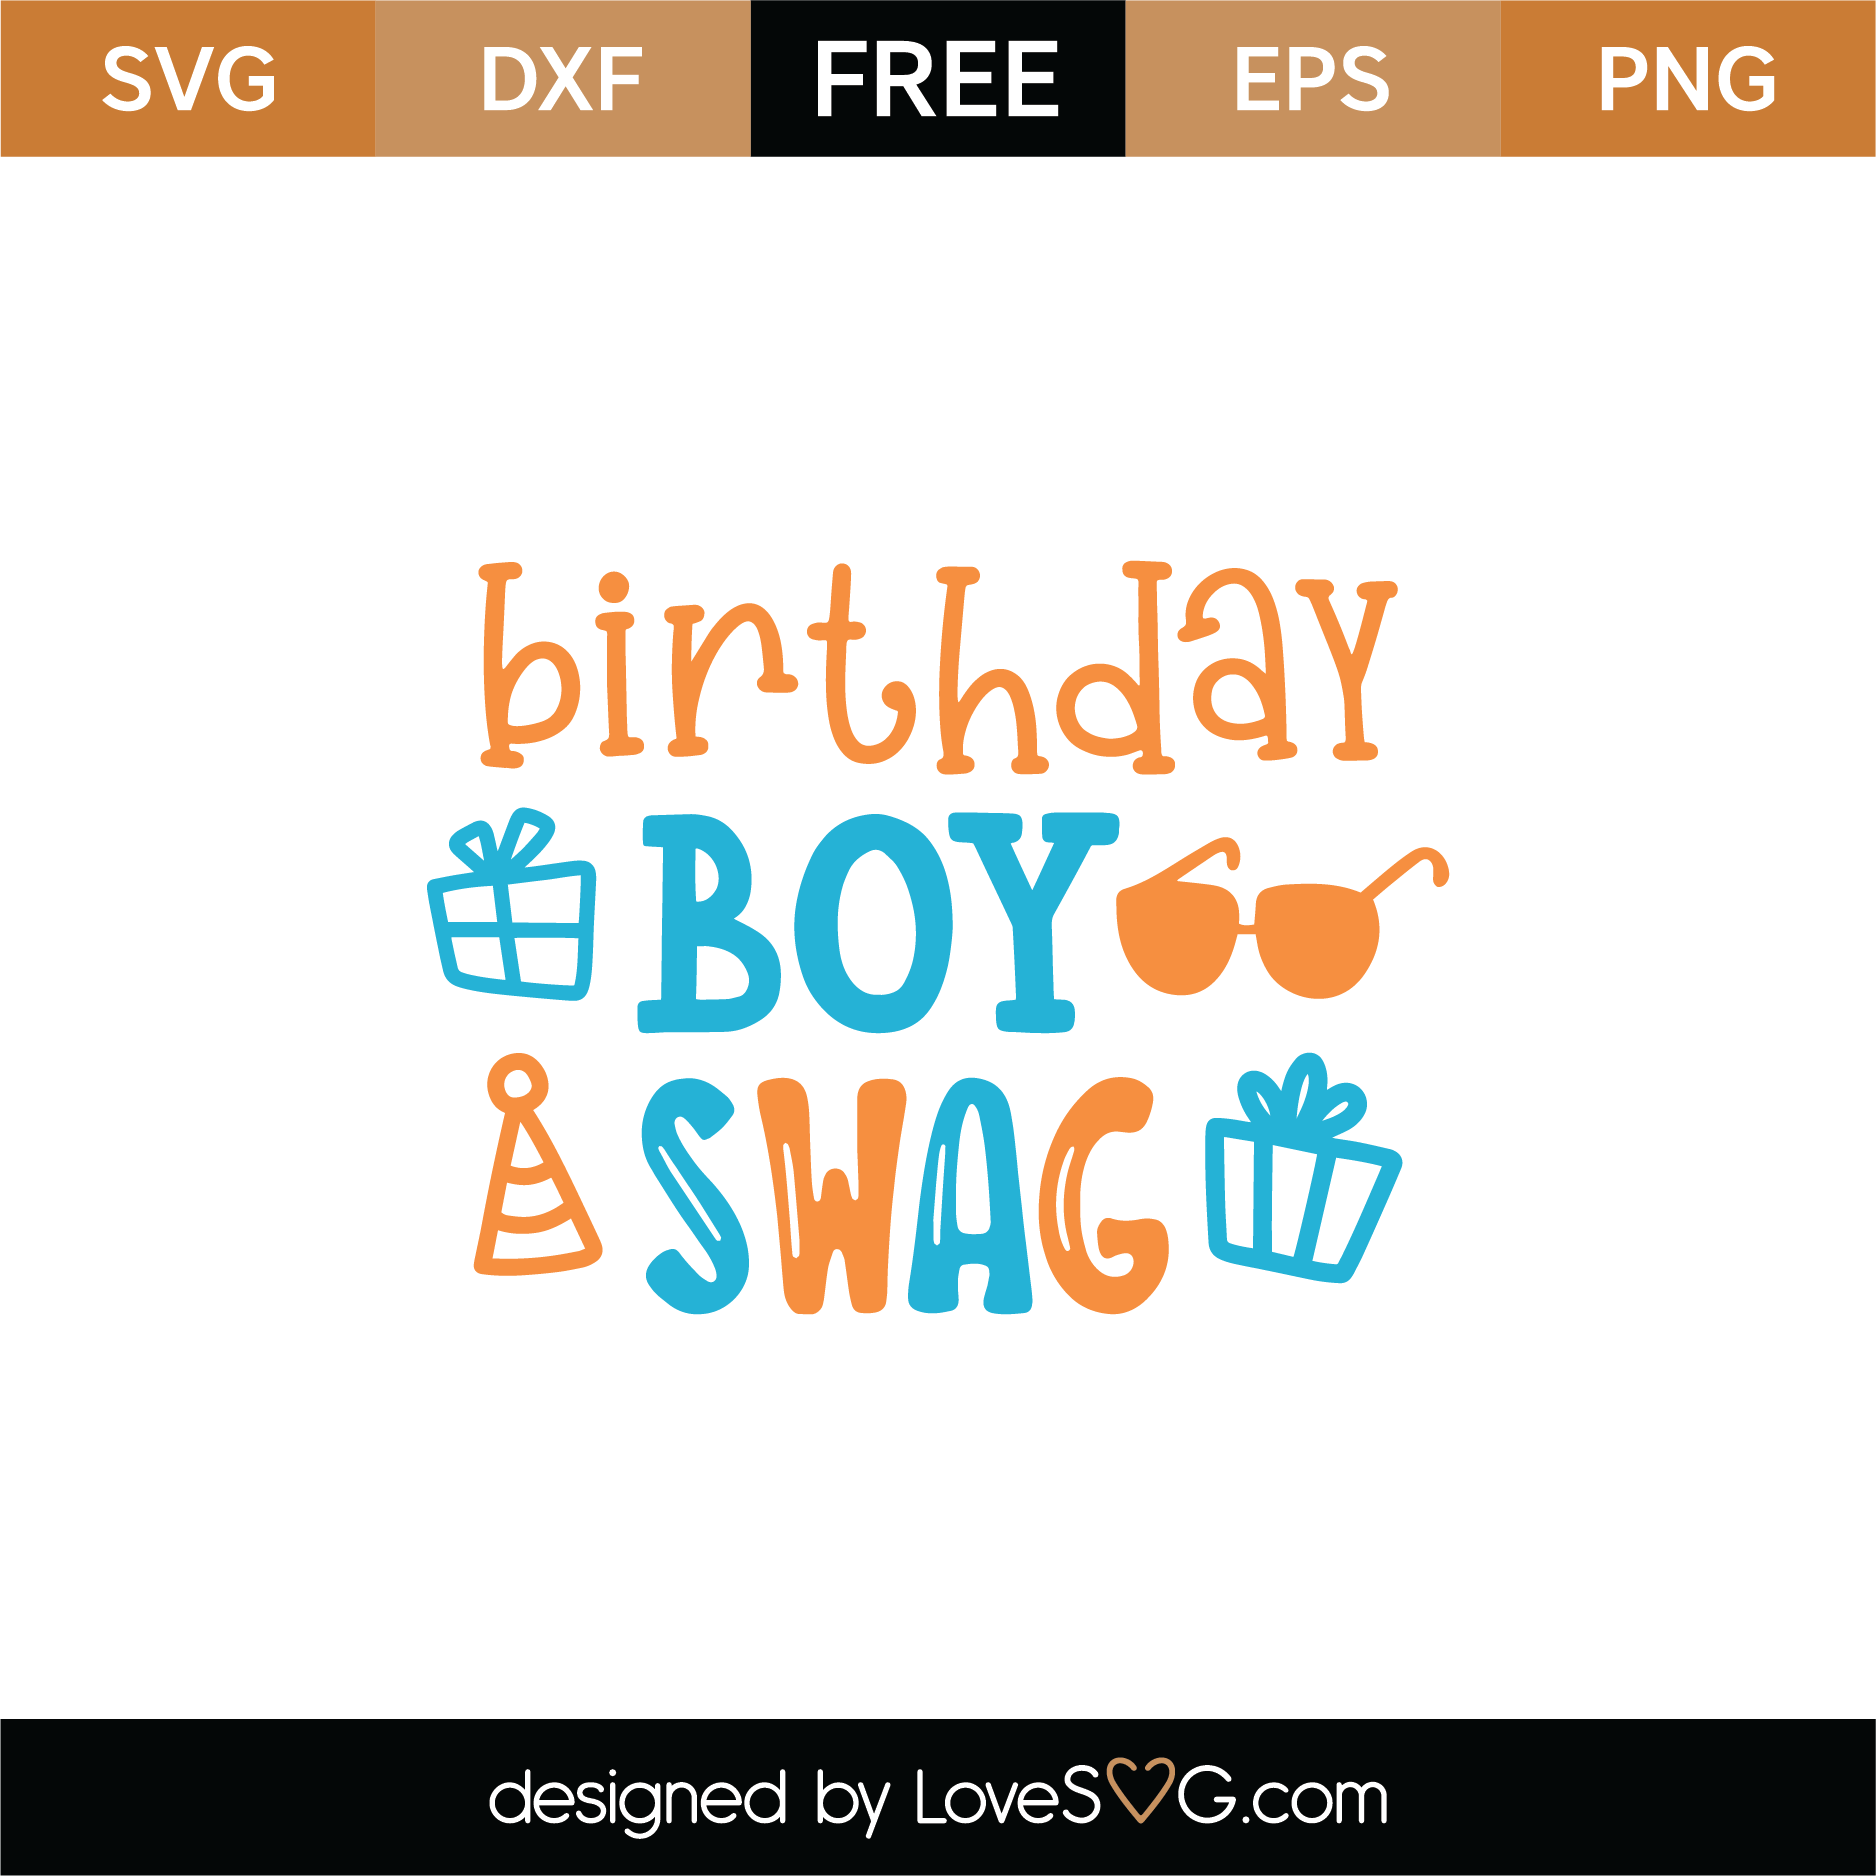 Download Free Birthday Boy Swag SVG Cut File | Lovesvg.com